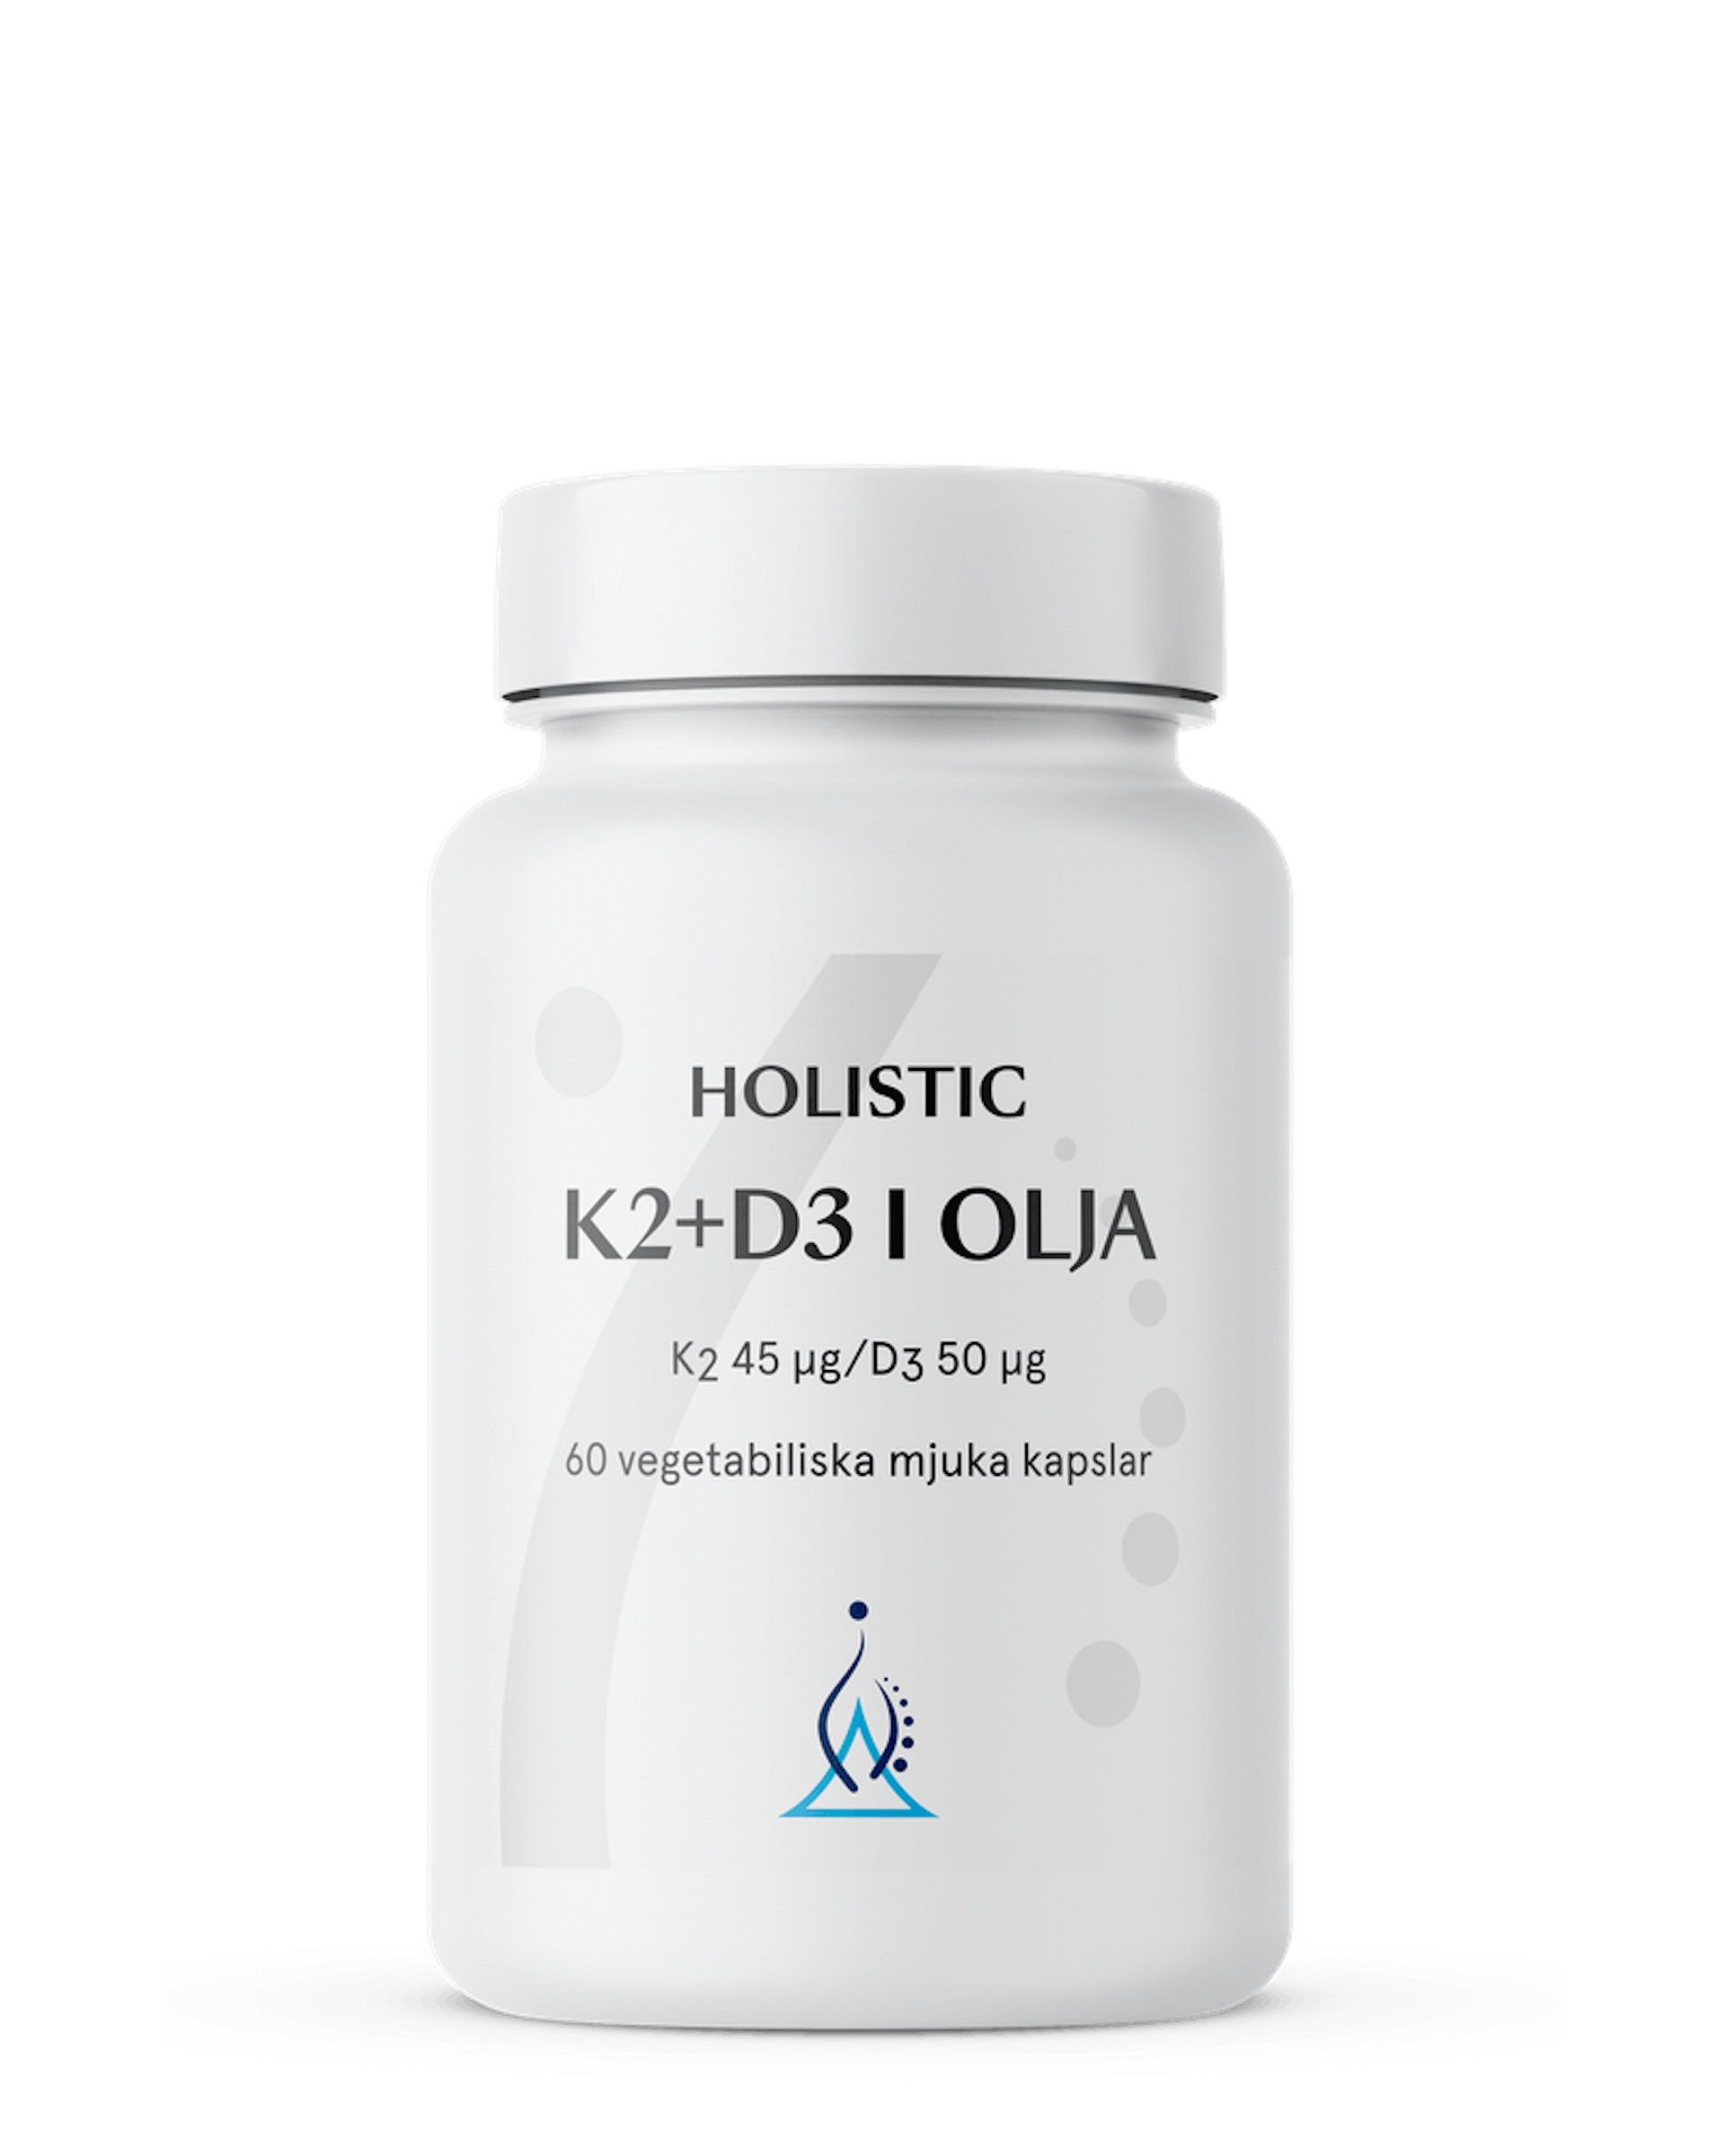 K2+D3-vitamin i olja, 60 kapslar (1 av 1)